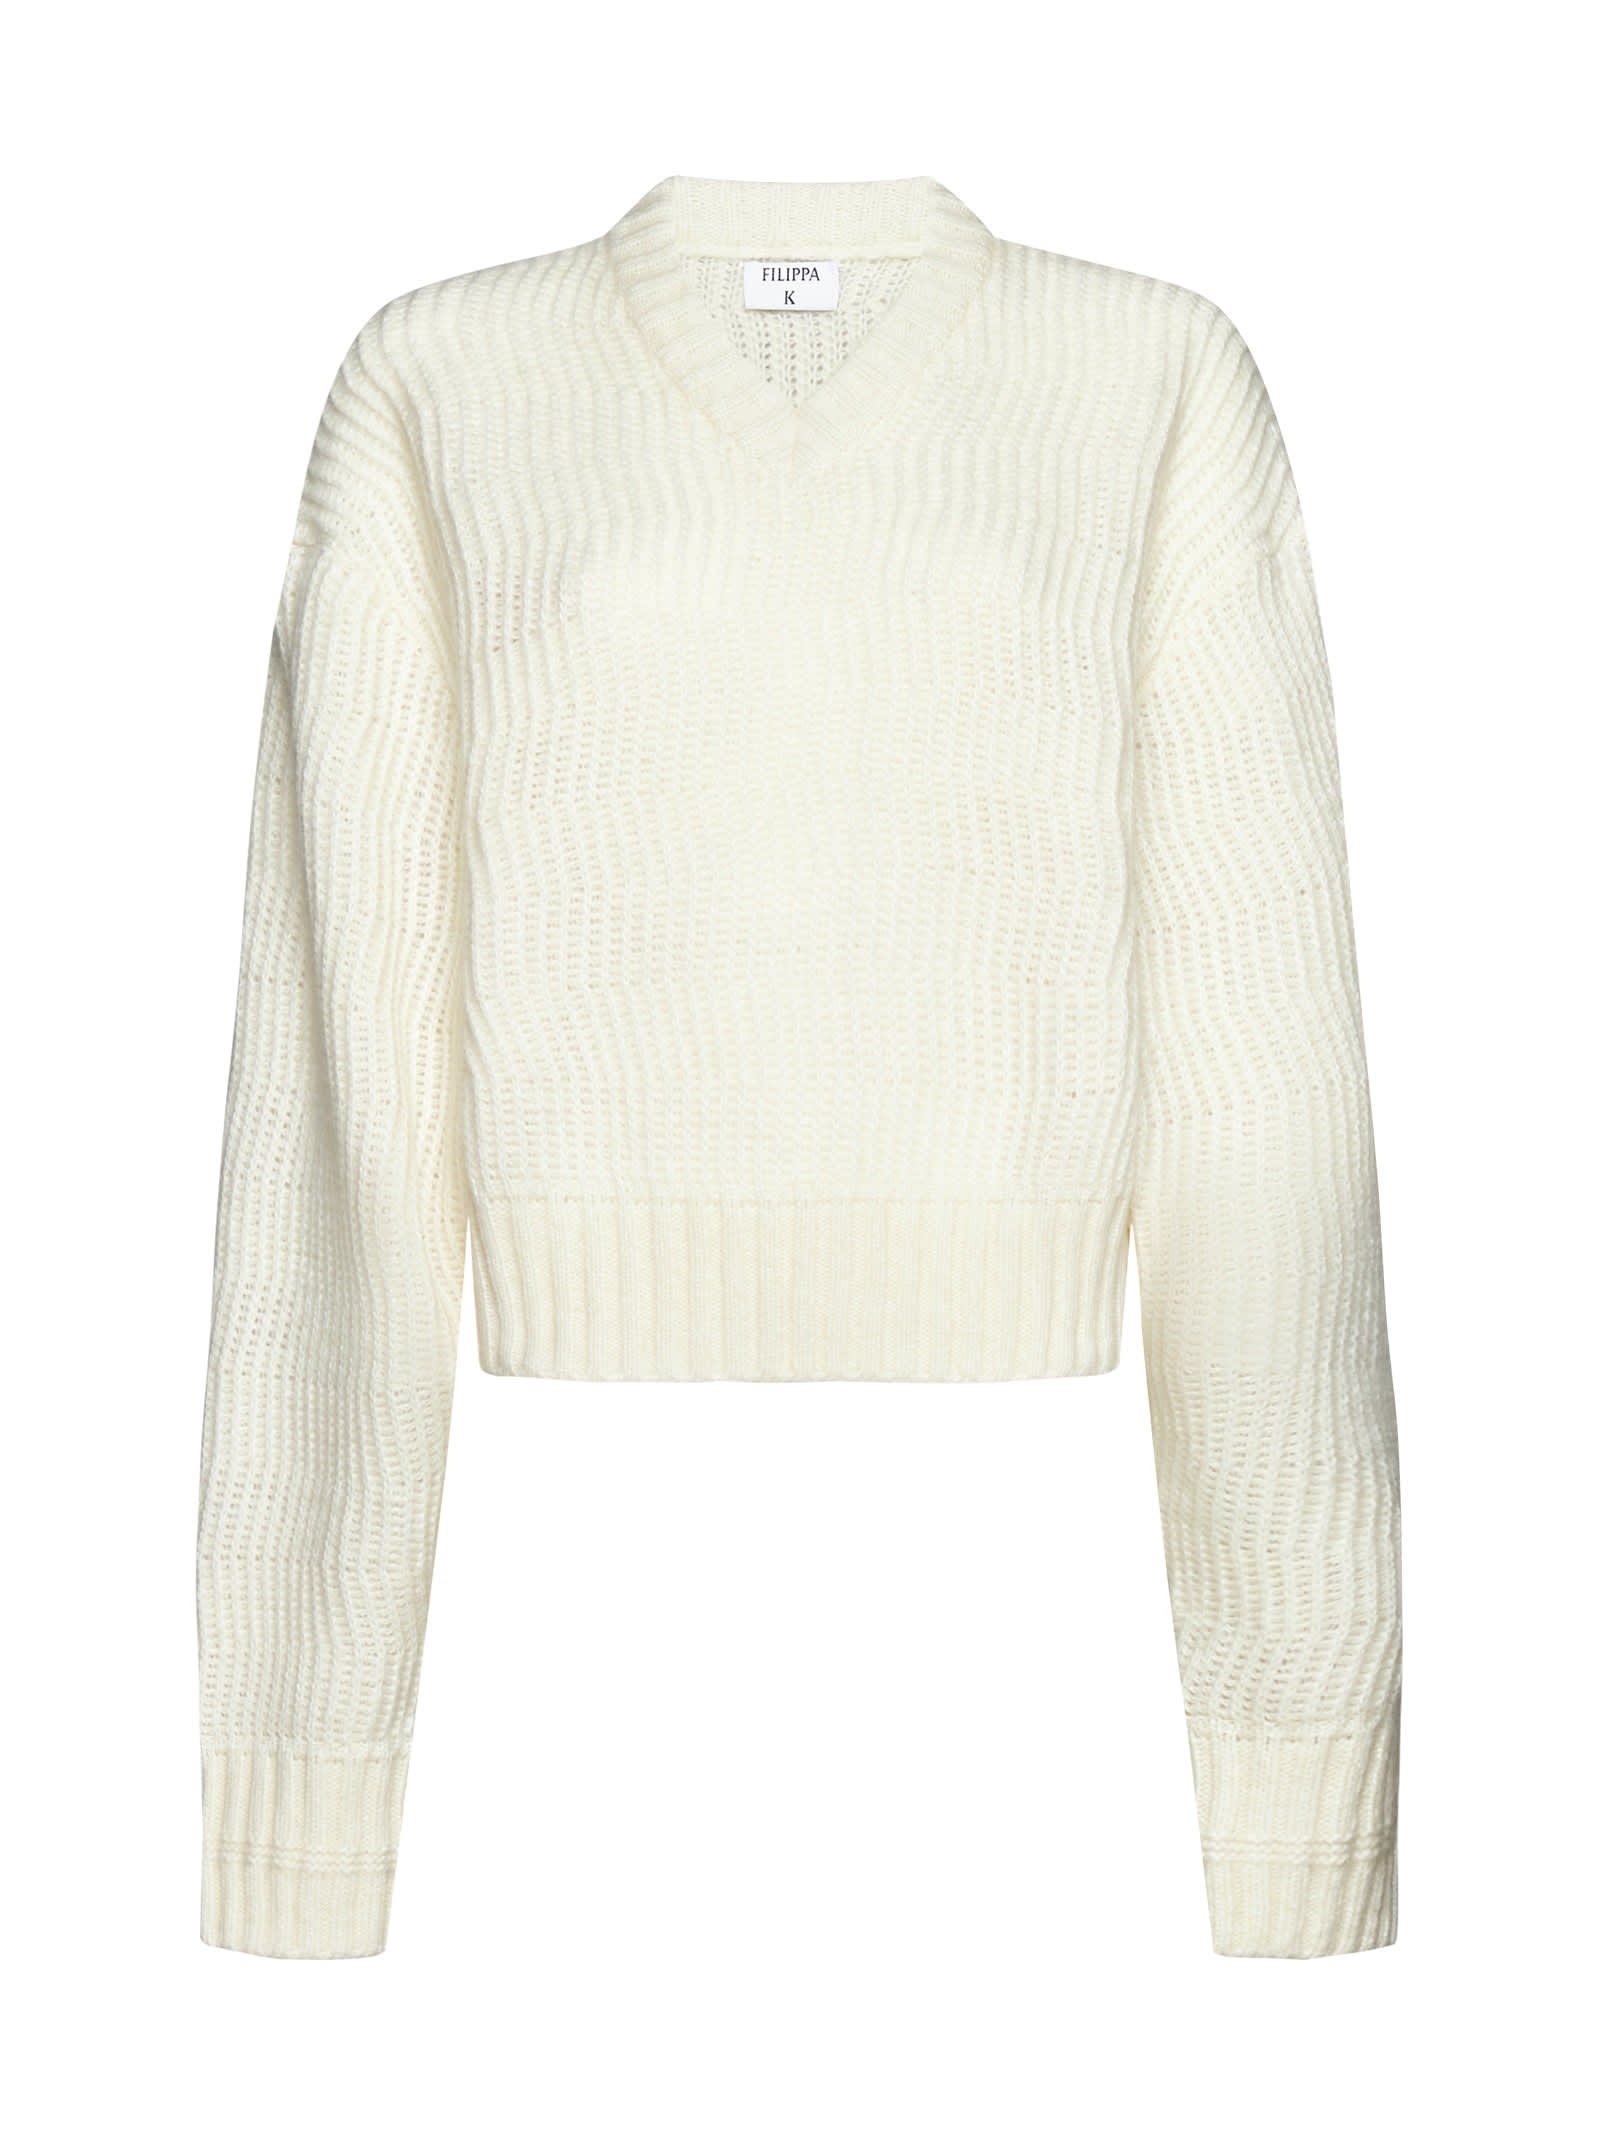 Filippa K Sweater In White